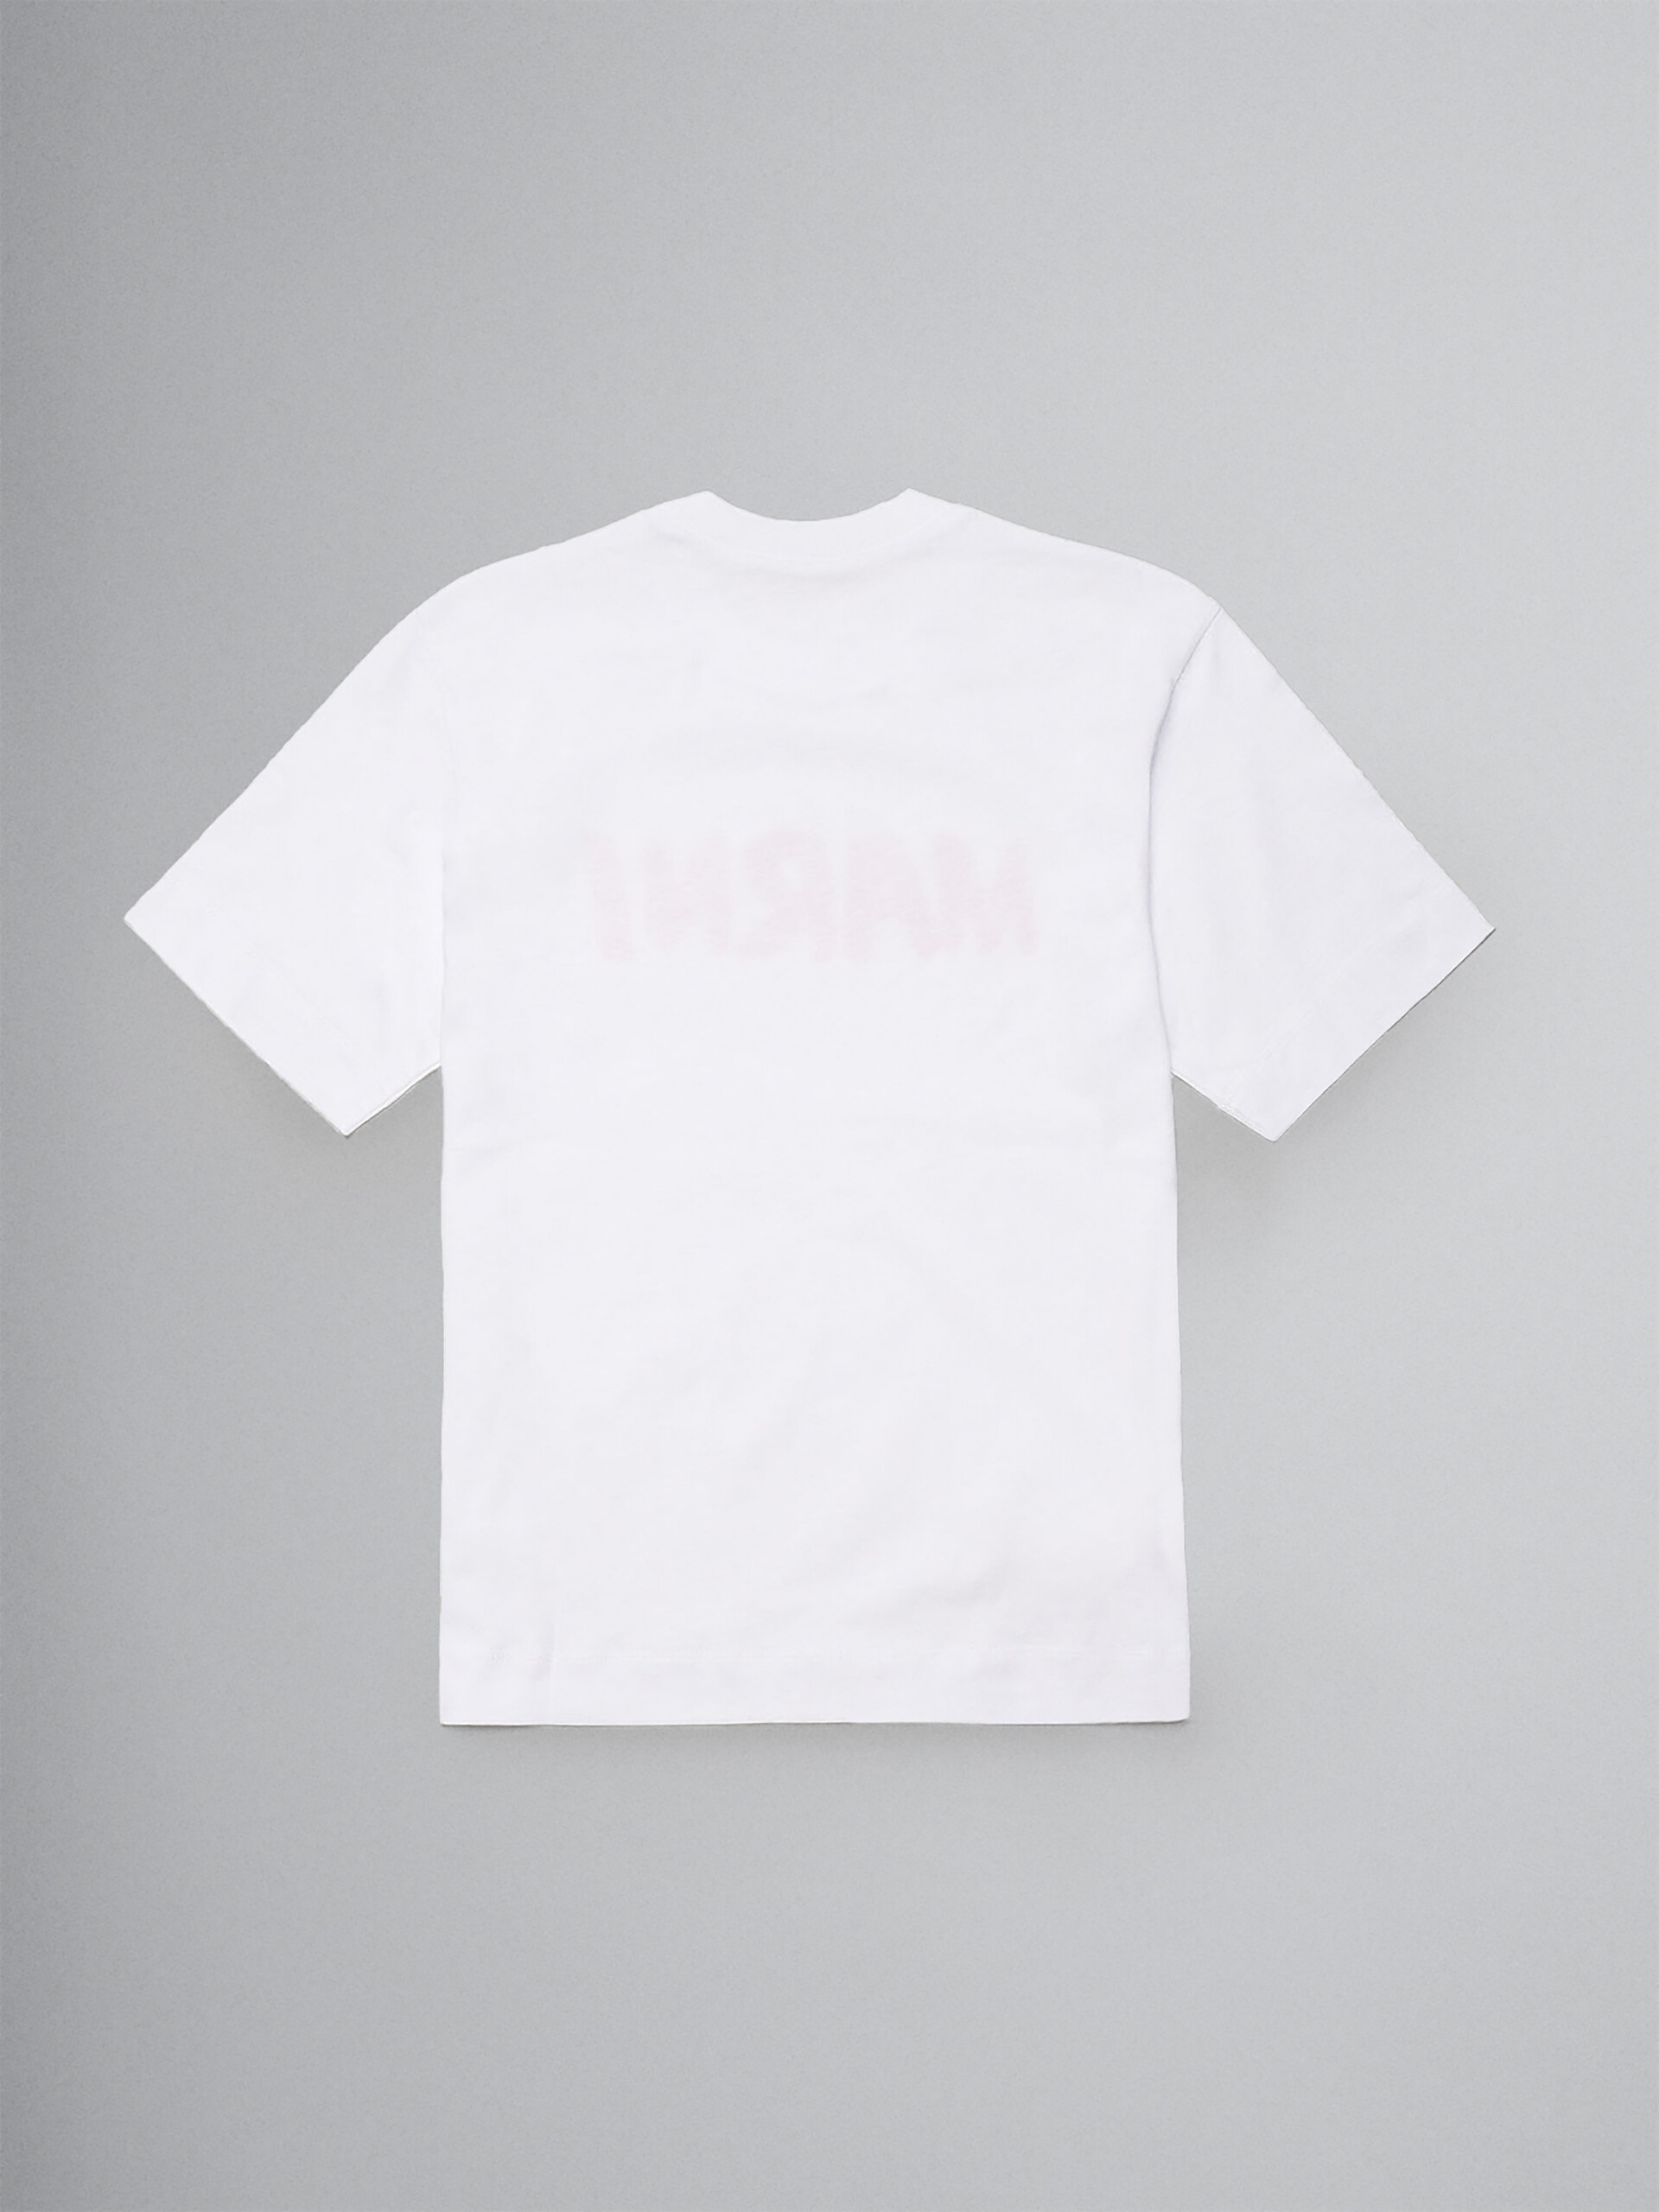 Fuchsia jersey T-shirt with Brush logo - T-shirts - Image 2